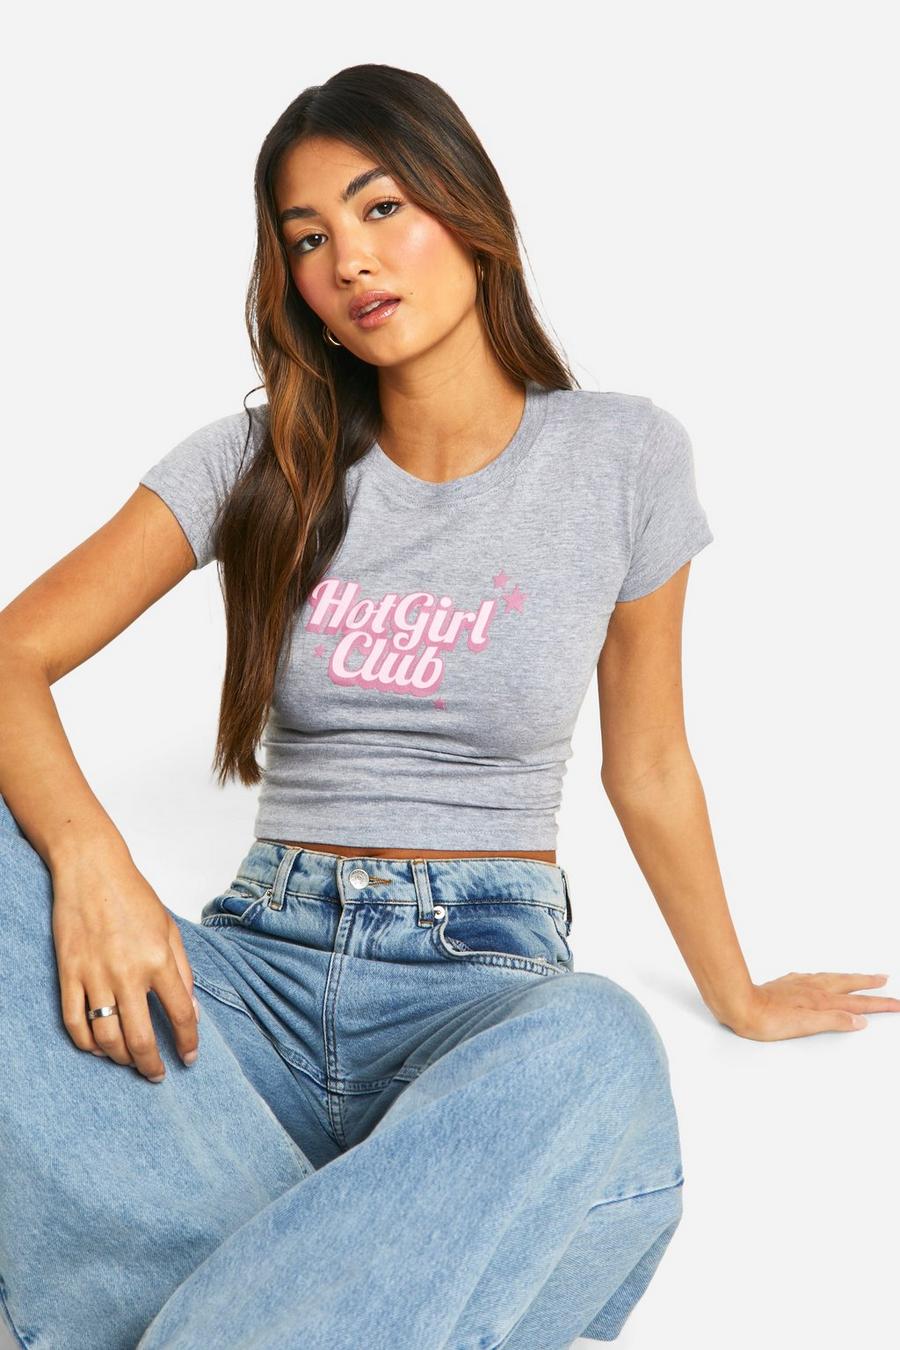 Baby T-Shirt mit Hot Girl Club Print, Grey marl